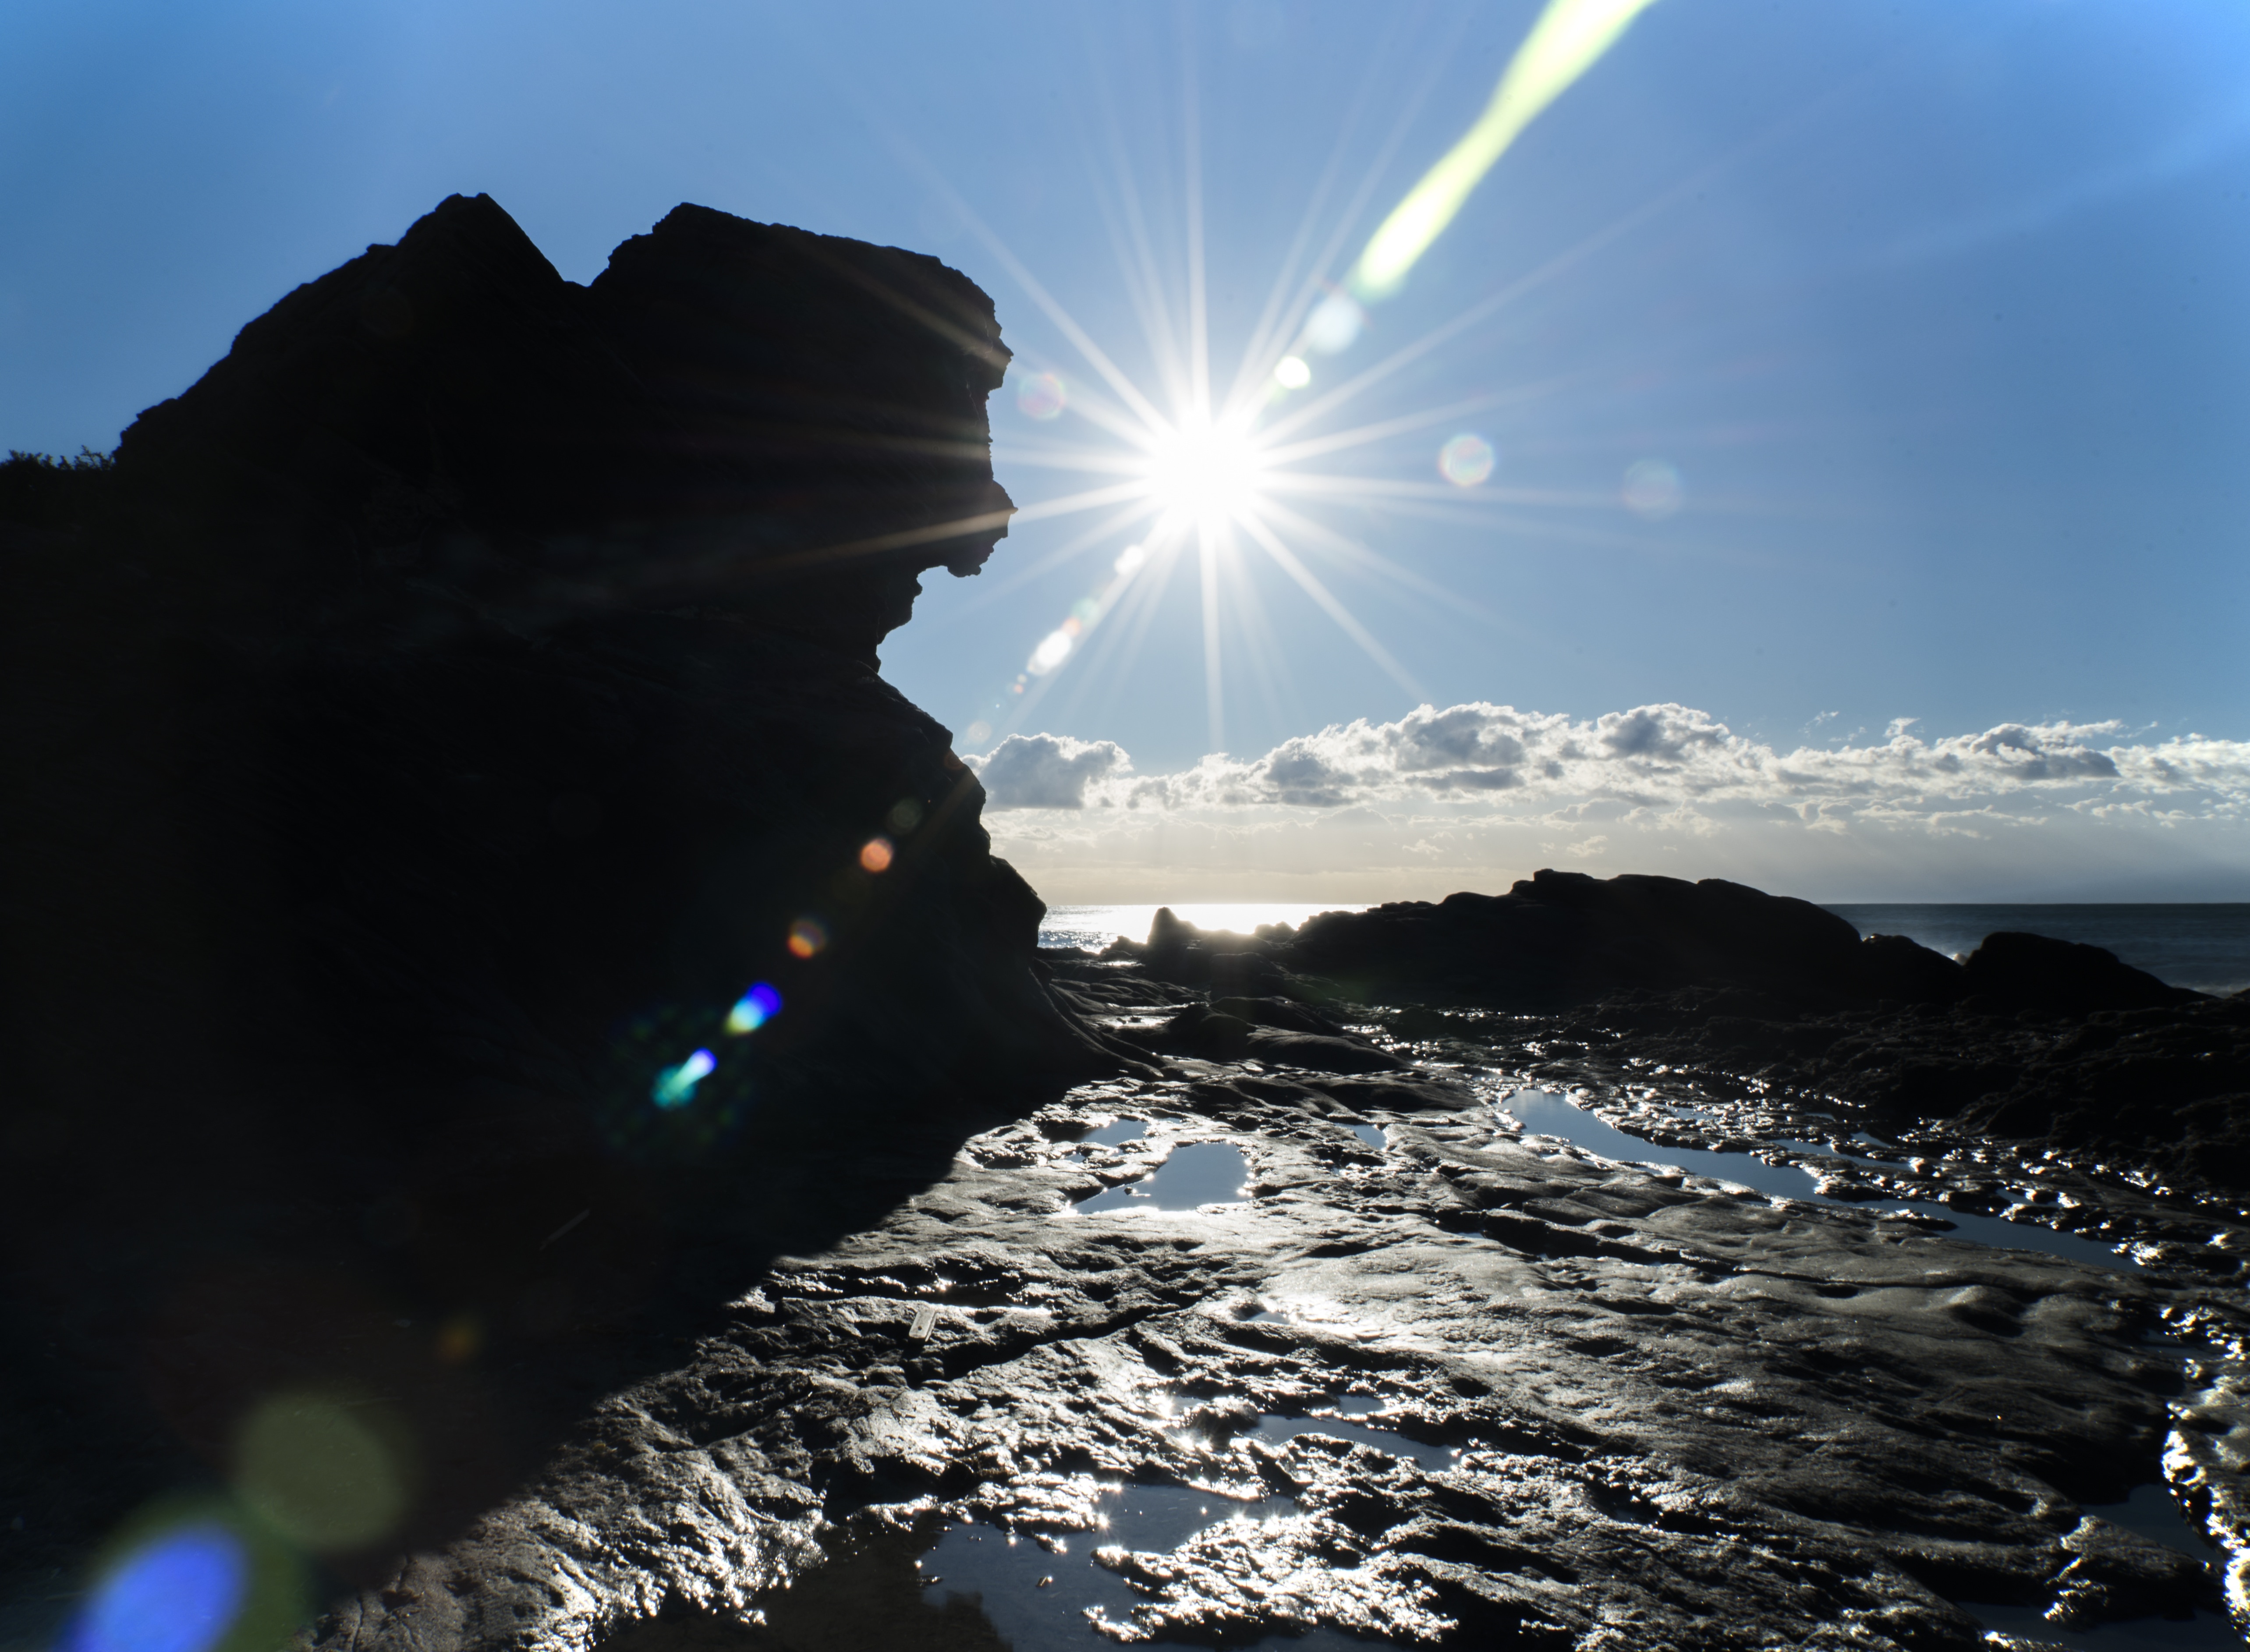 silhouette of rock formation near body of water under blue sky